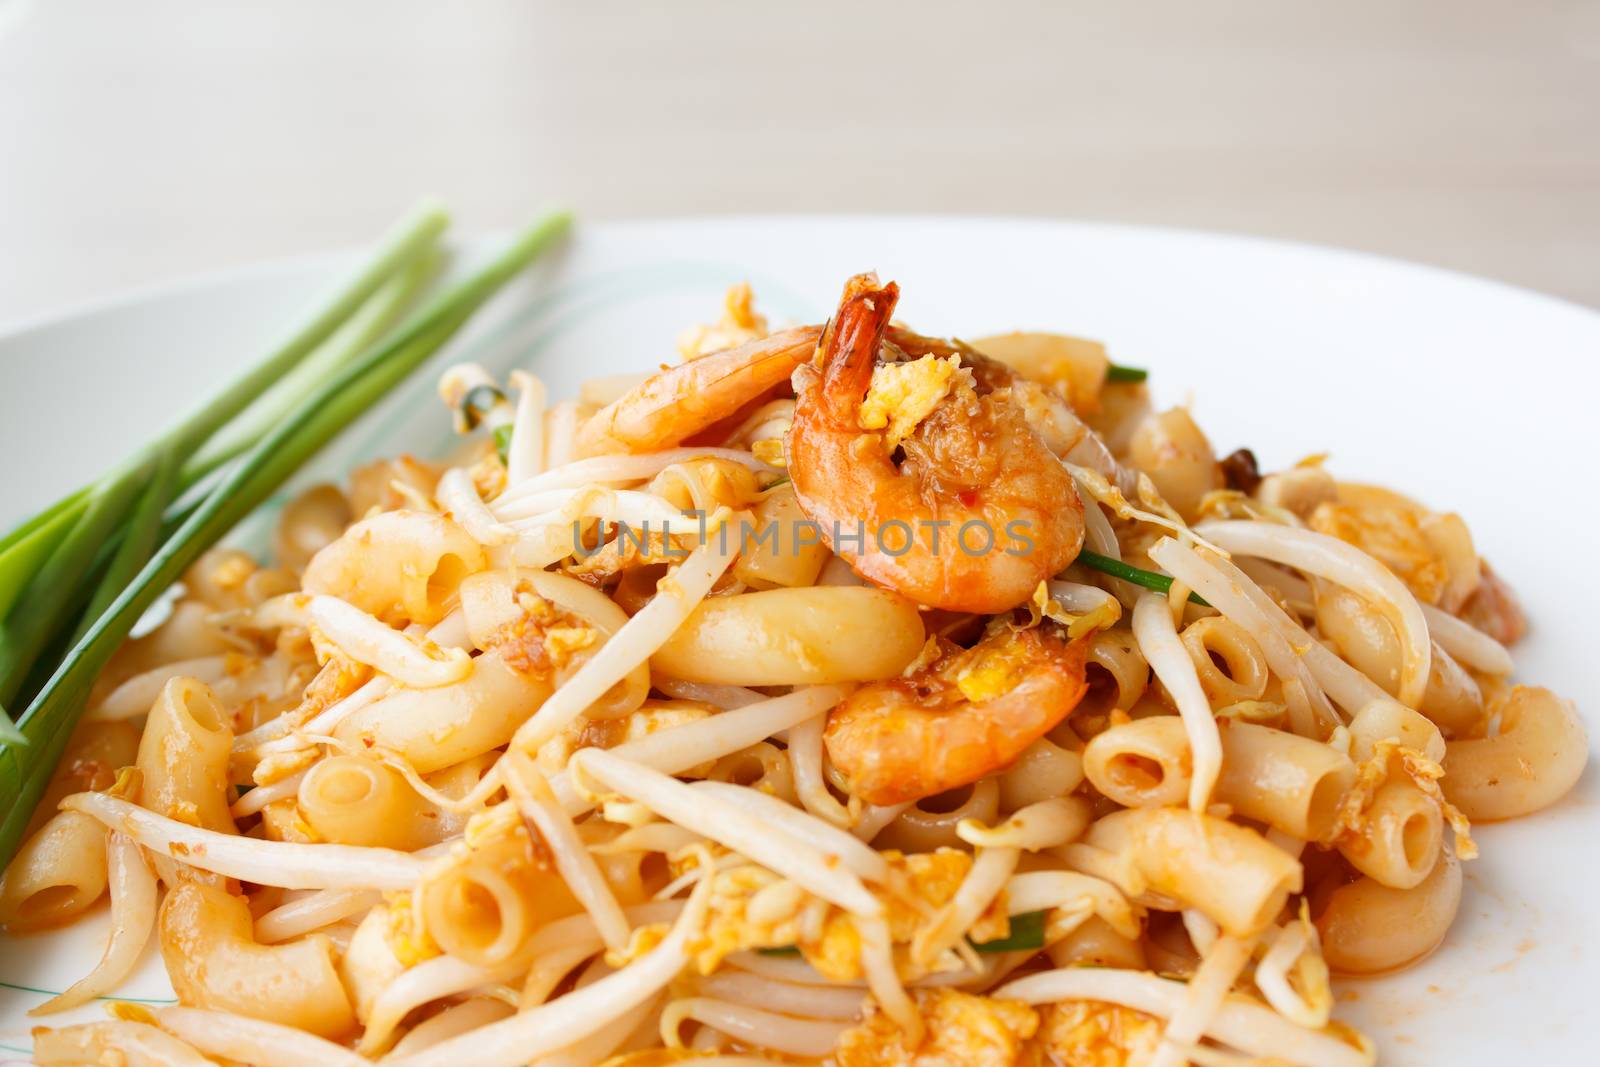  stir-fried macaroni  with shrimps (Pad Thai) by vitawin